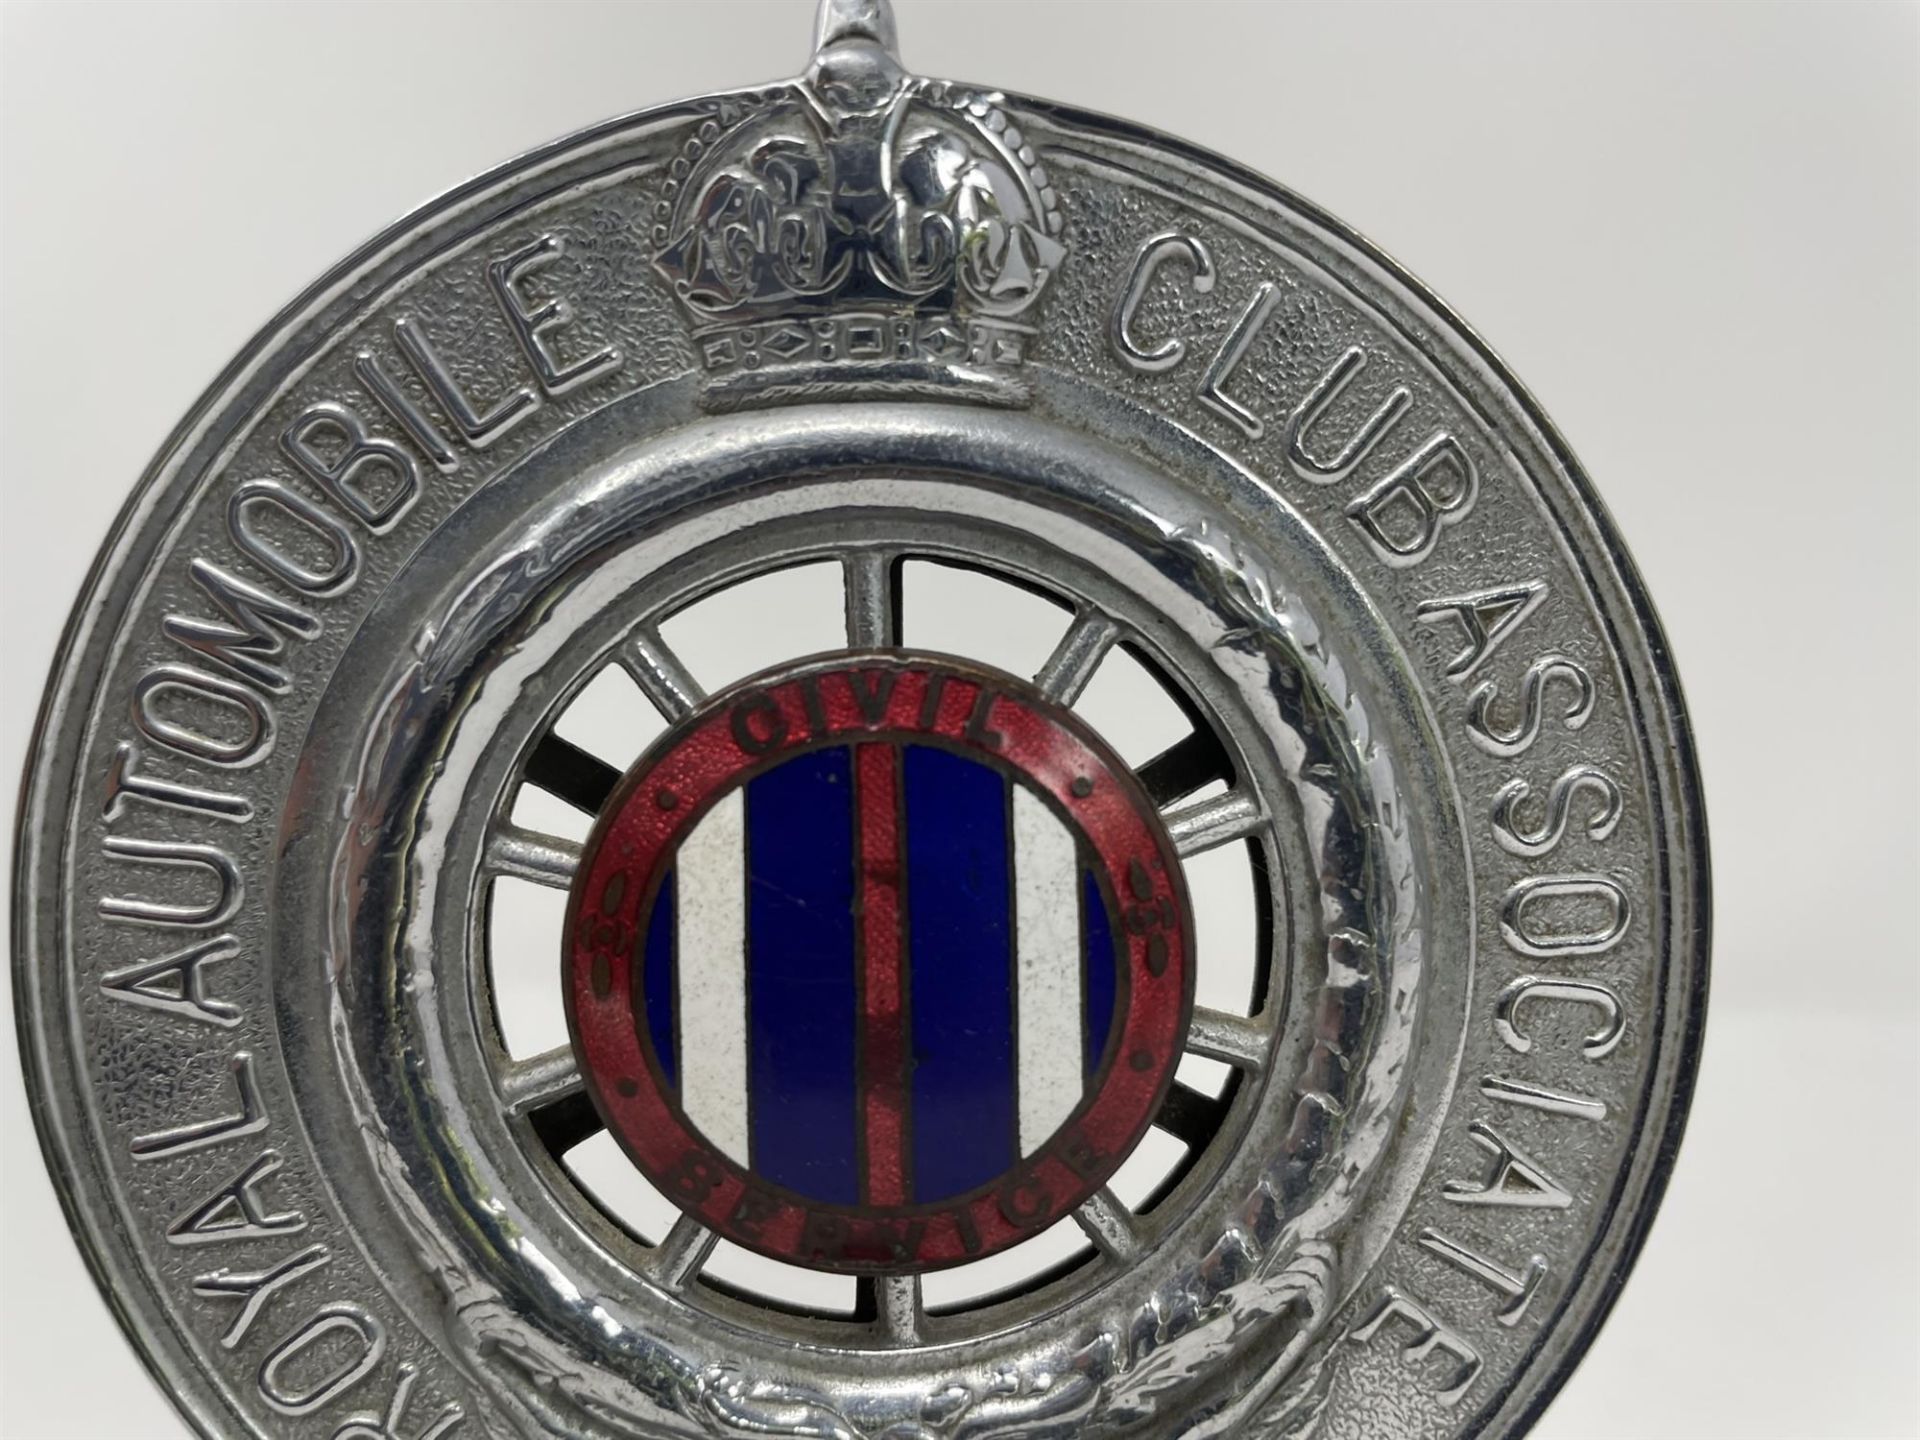 Royal Automobile Club Civil Service Badge - Image 4 of 4